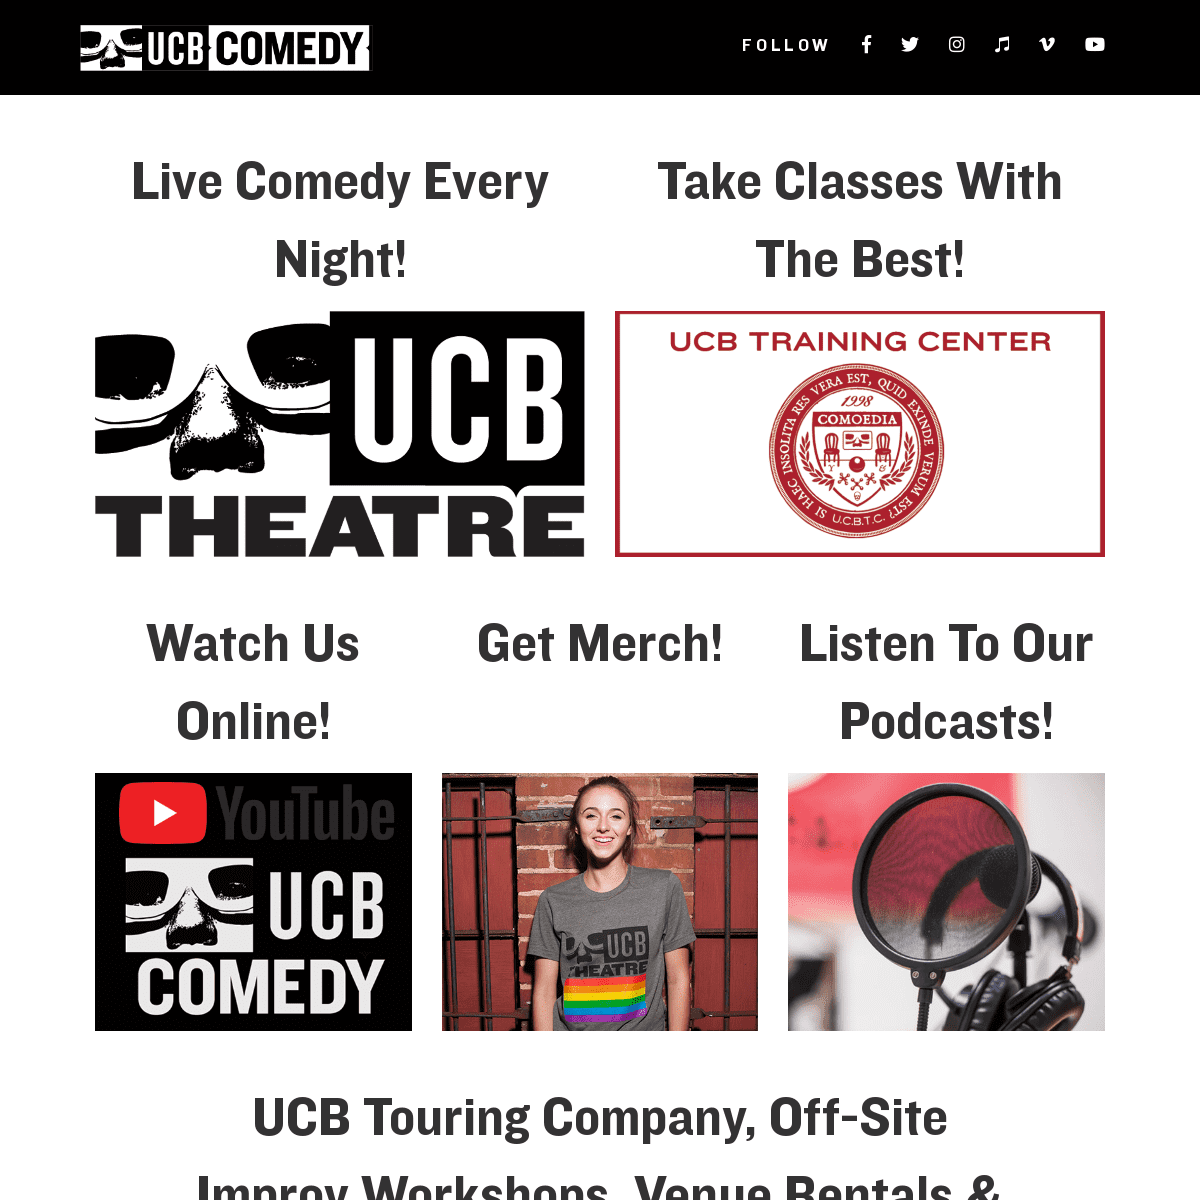 A complete backup of ucbcomedy.com